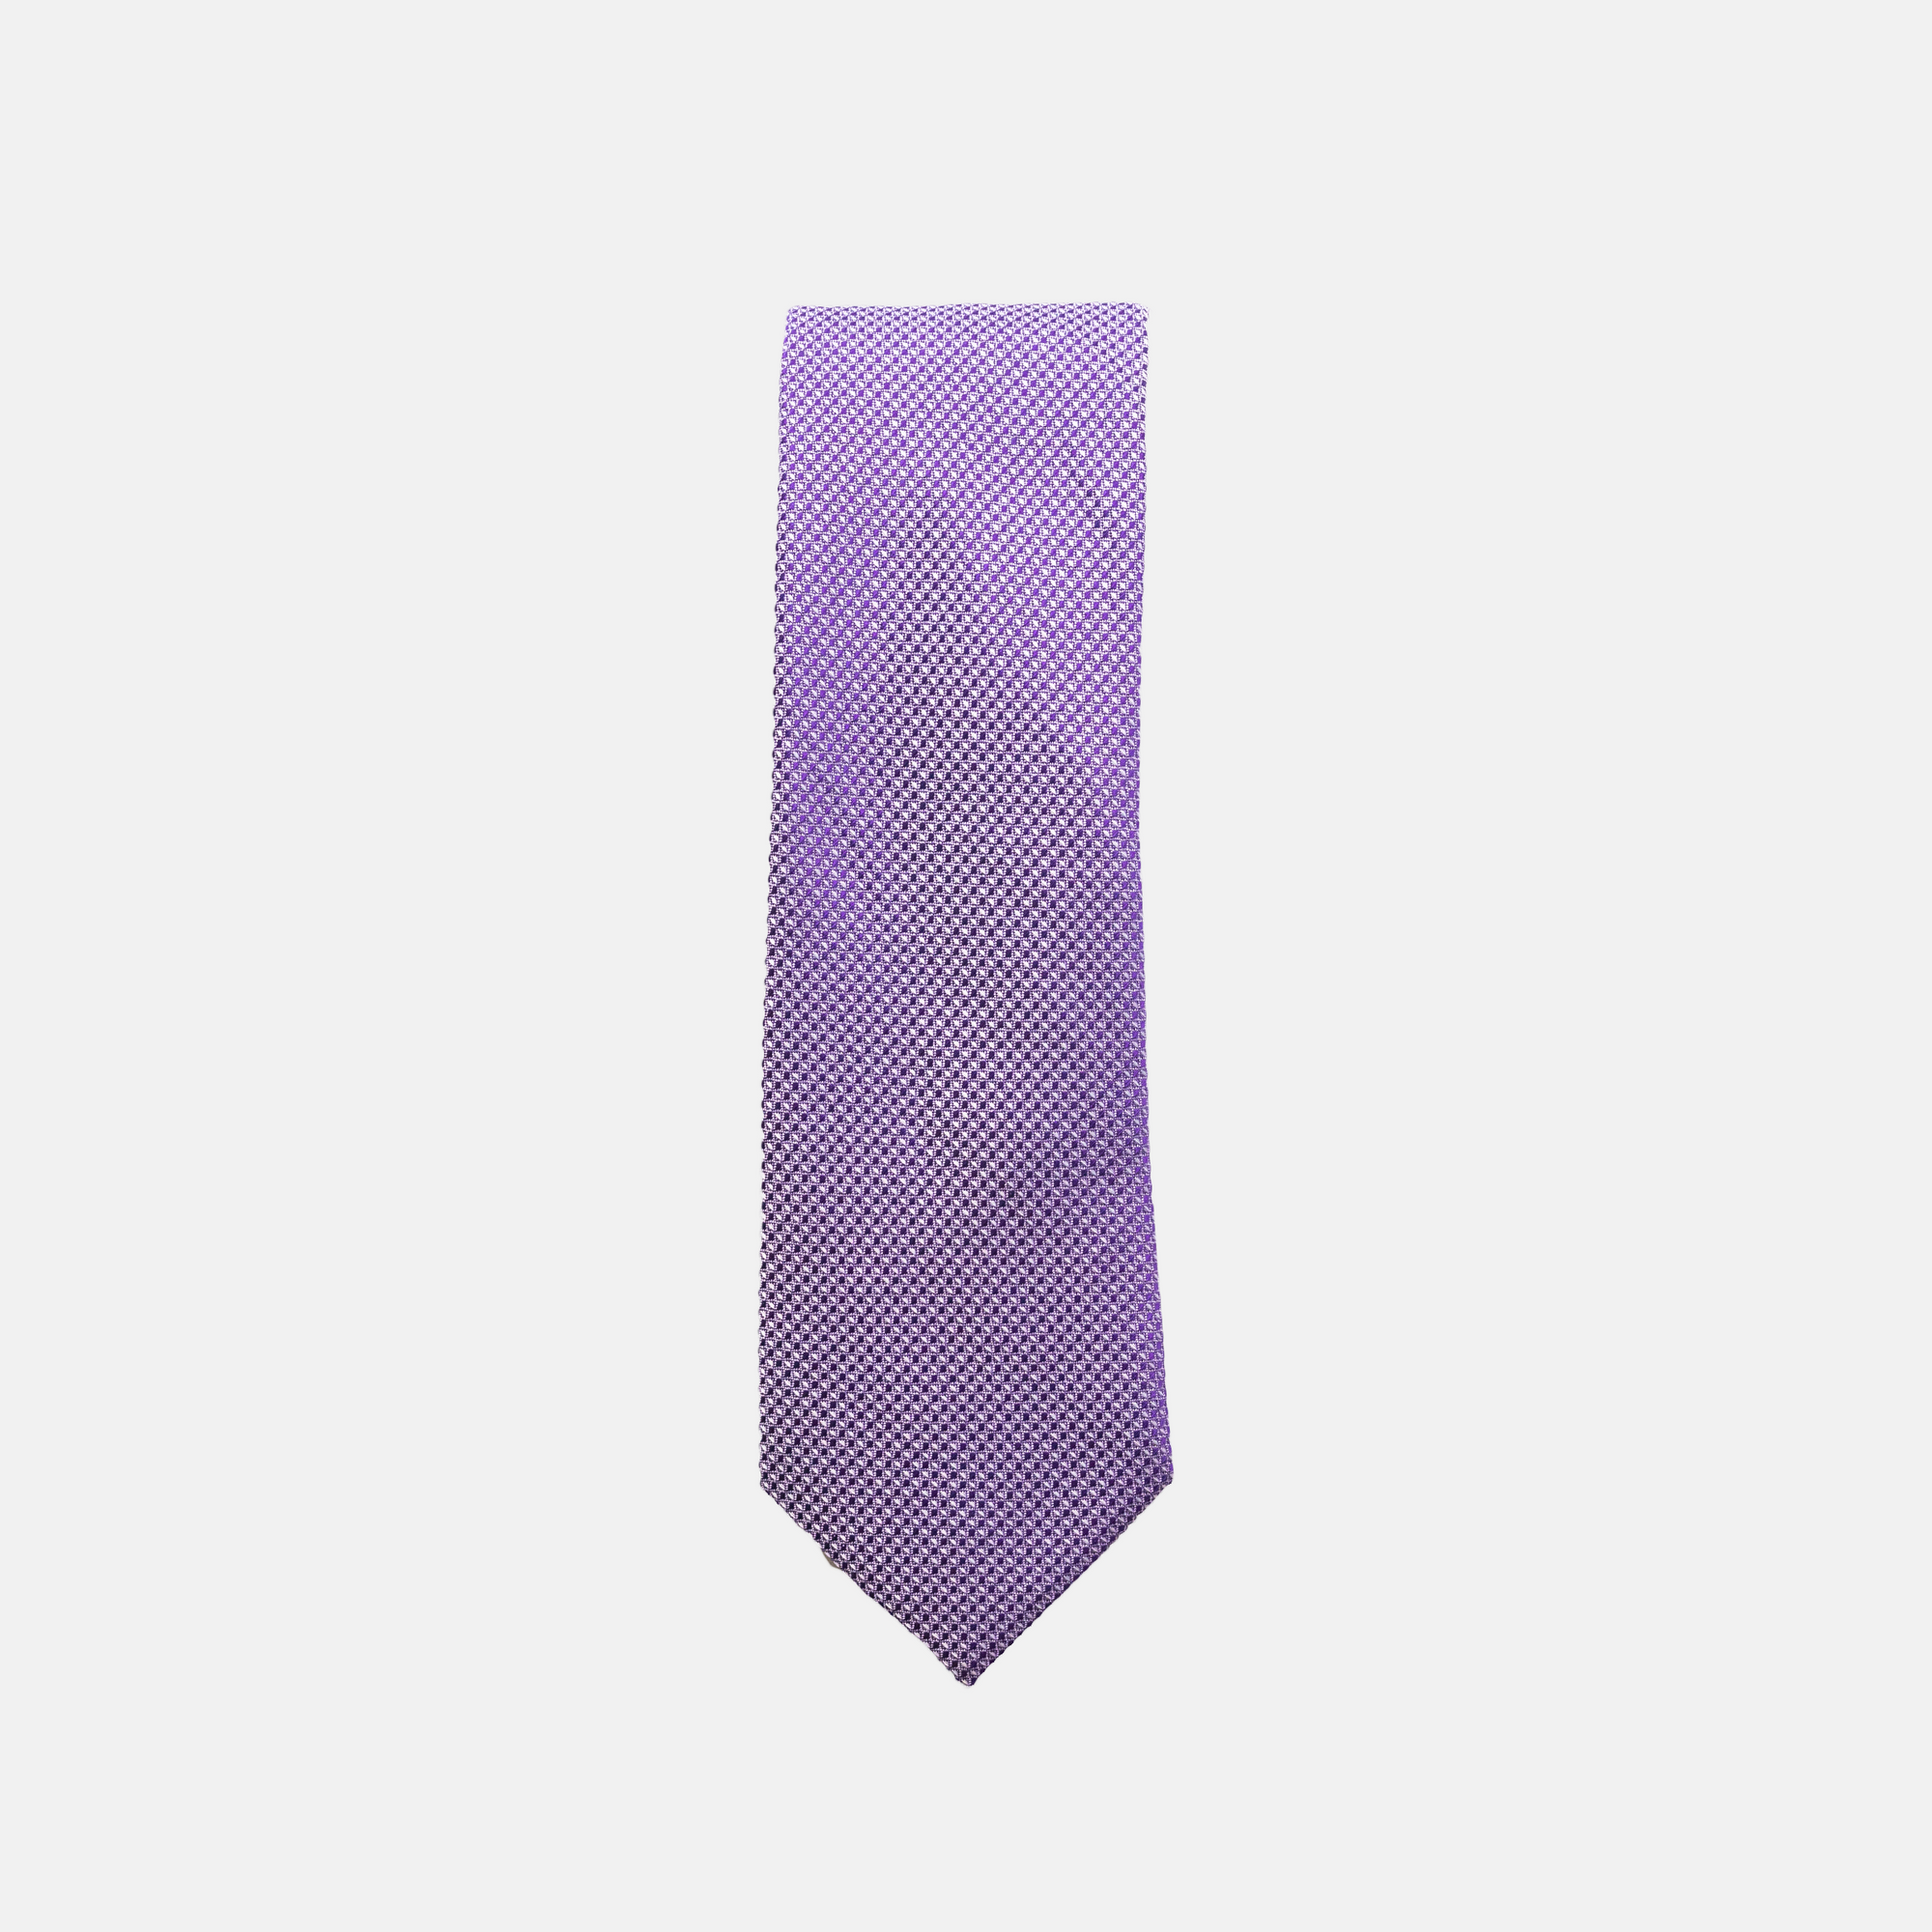 KELLY - Men's Tie